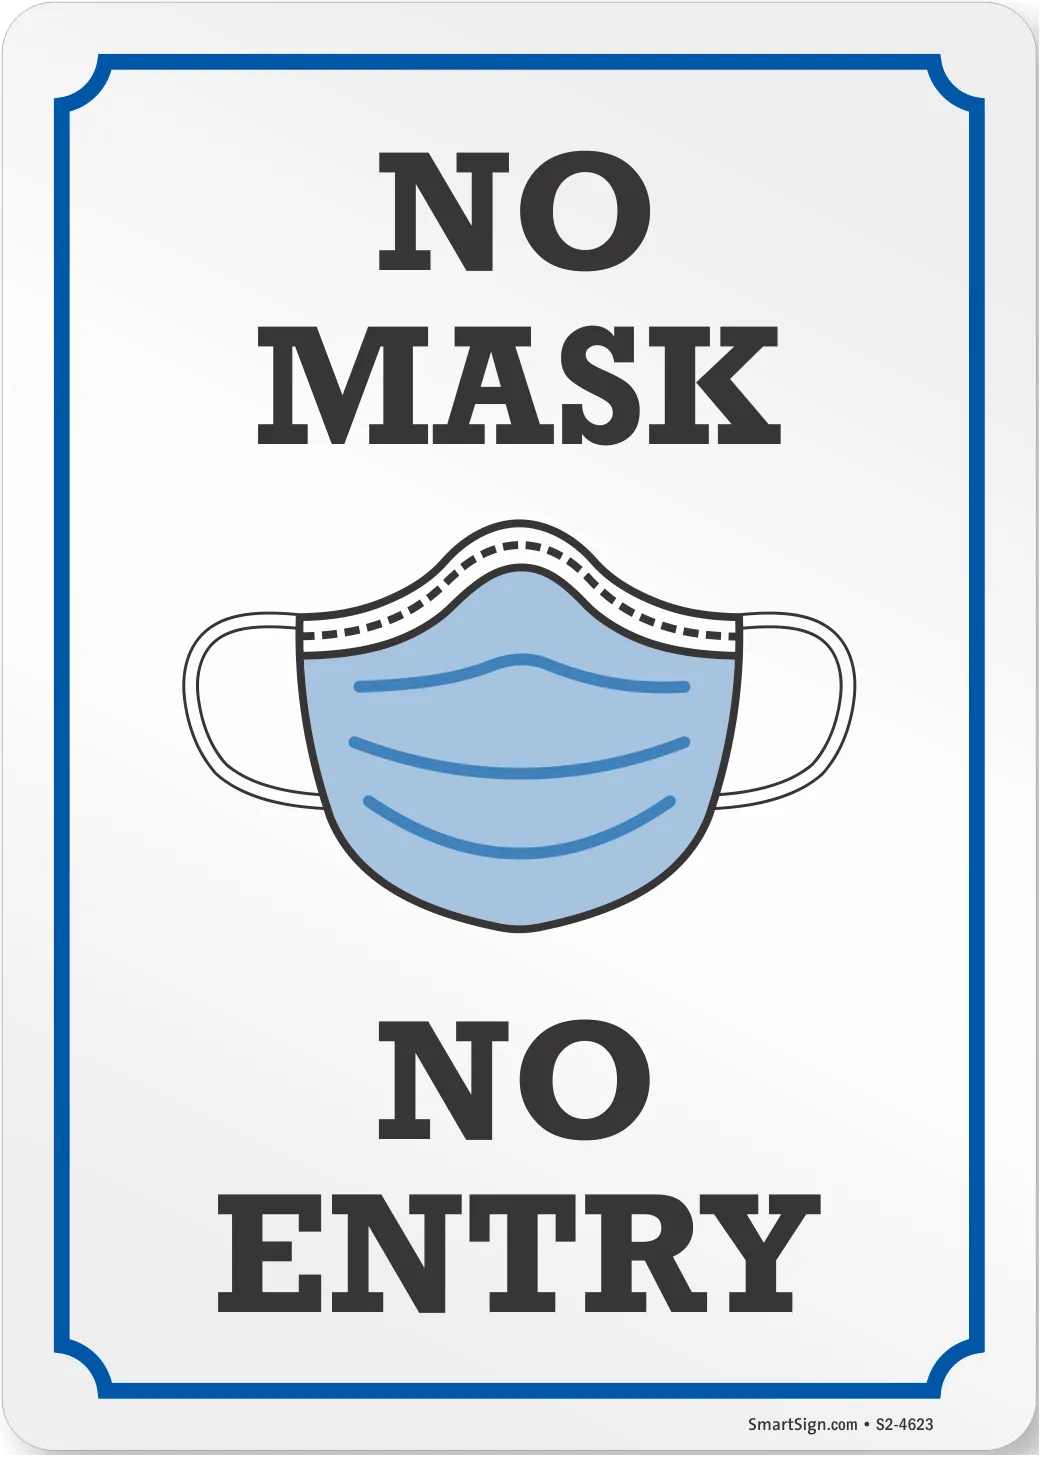 No Mask No Entry PDF